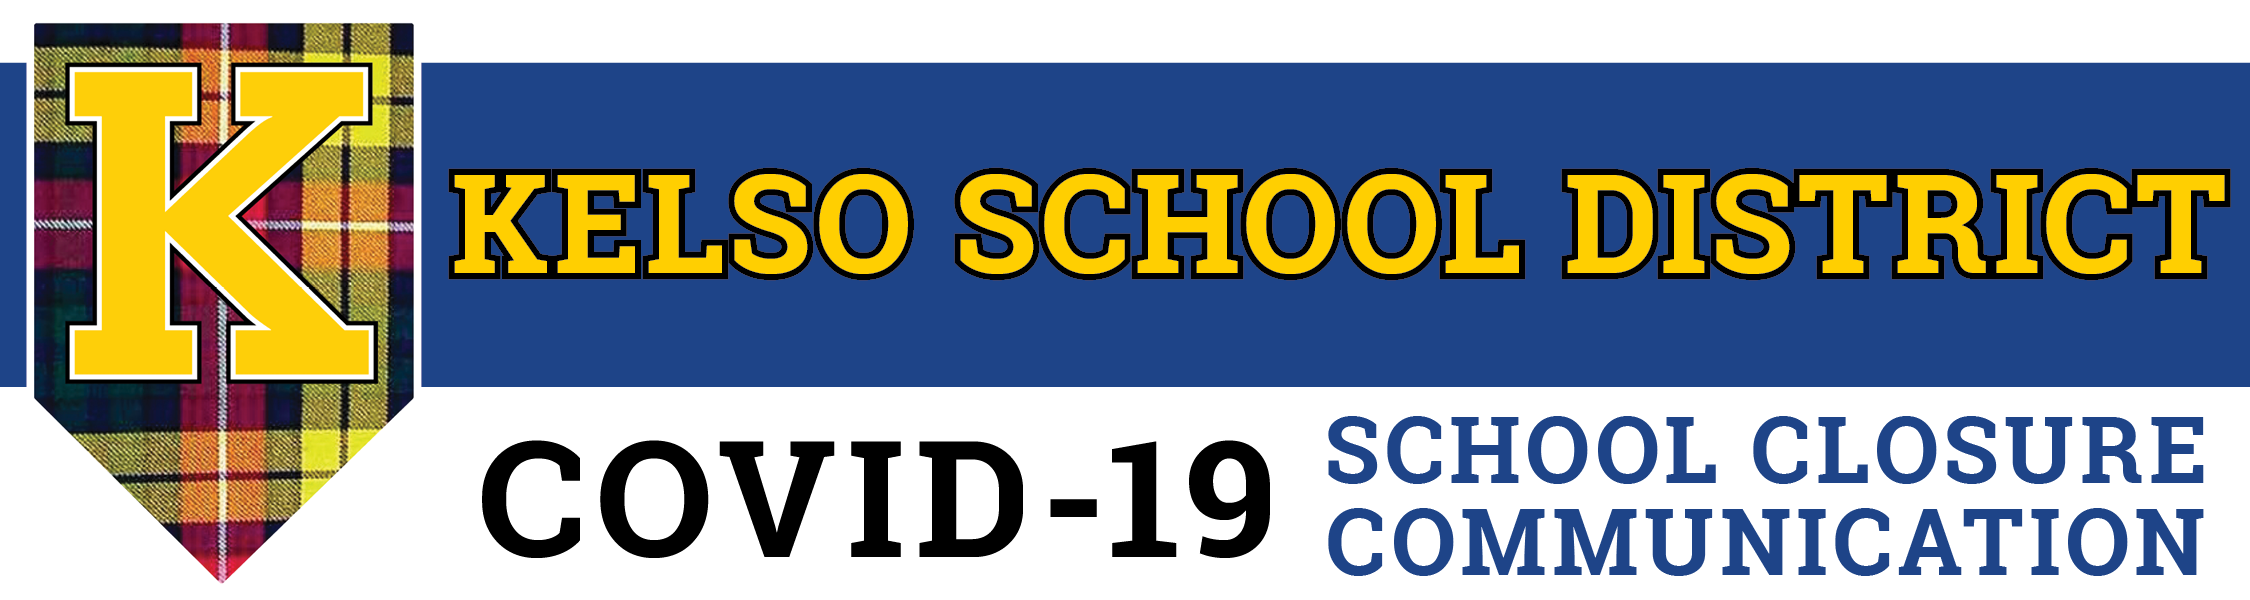 kelso school district covid-19 